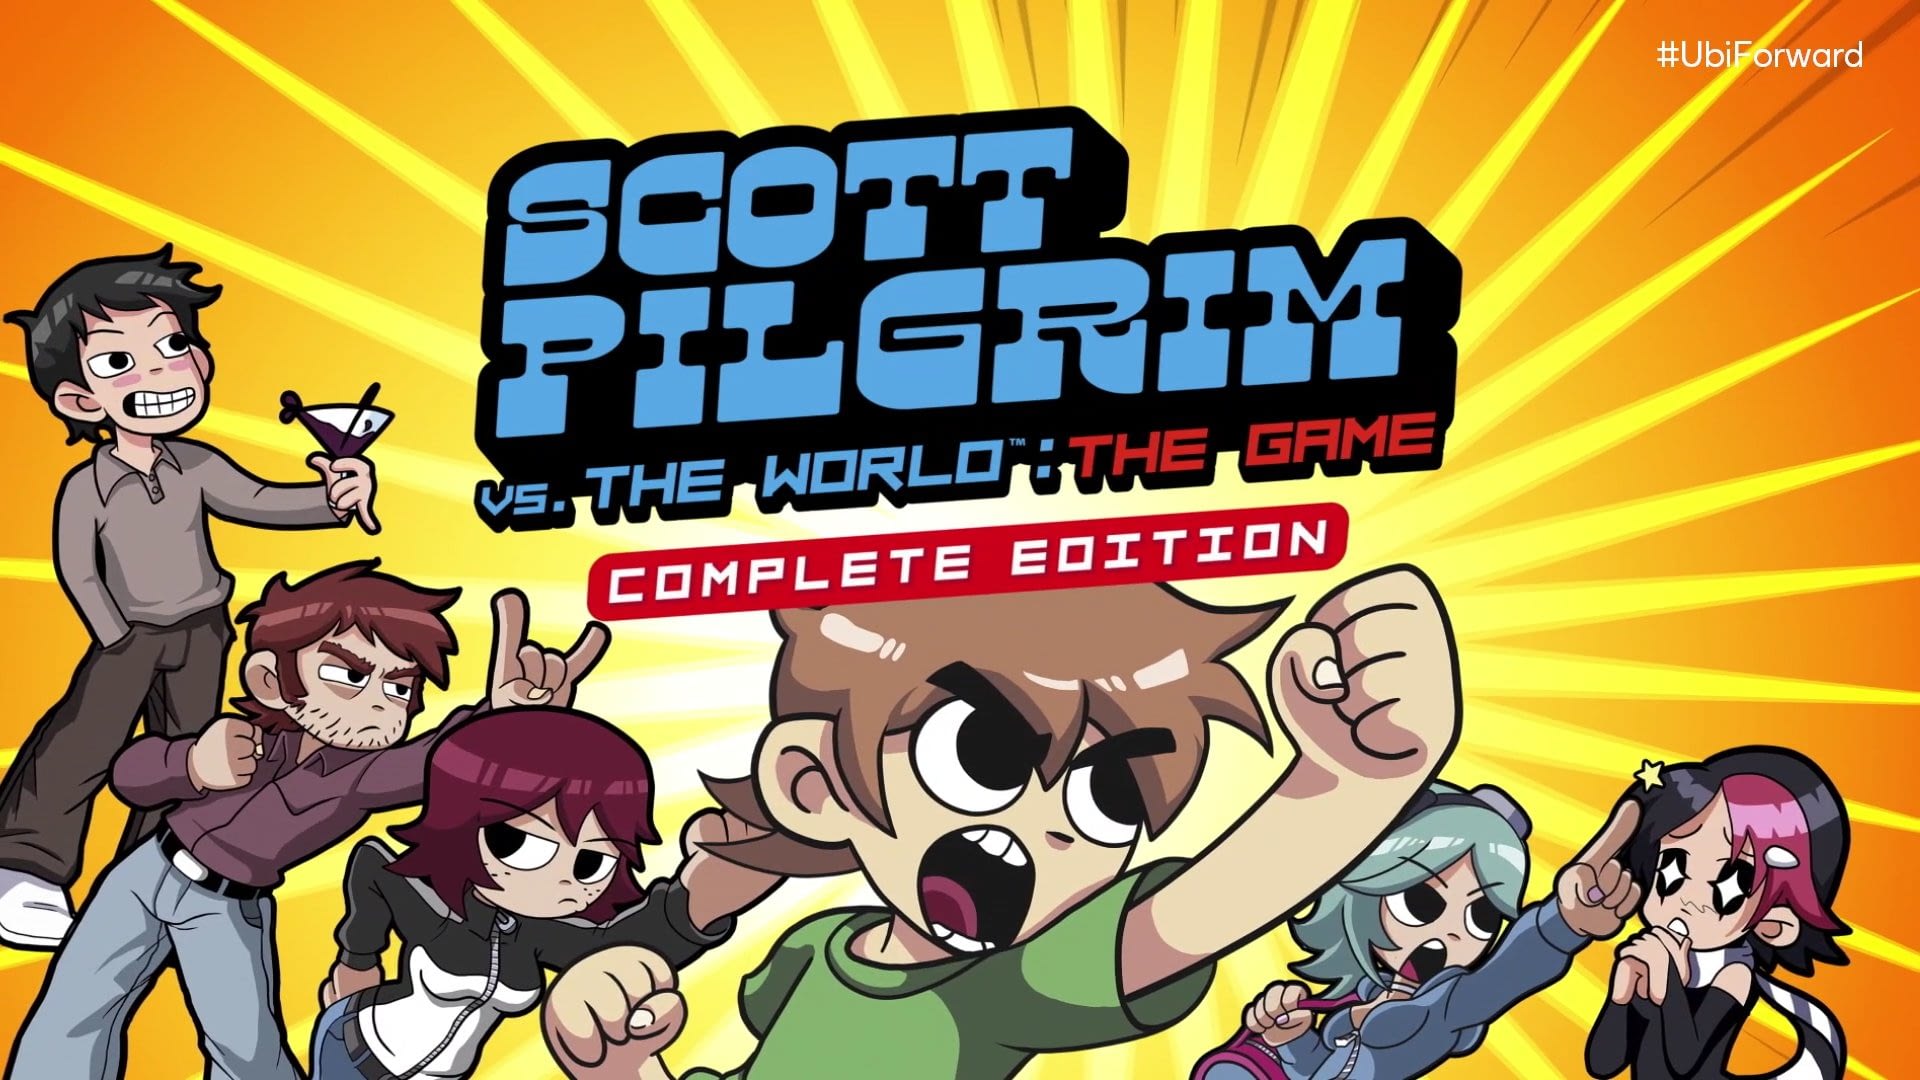 Scott Pilgrim vs The World: The Game Complete Edition announced